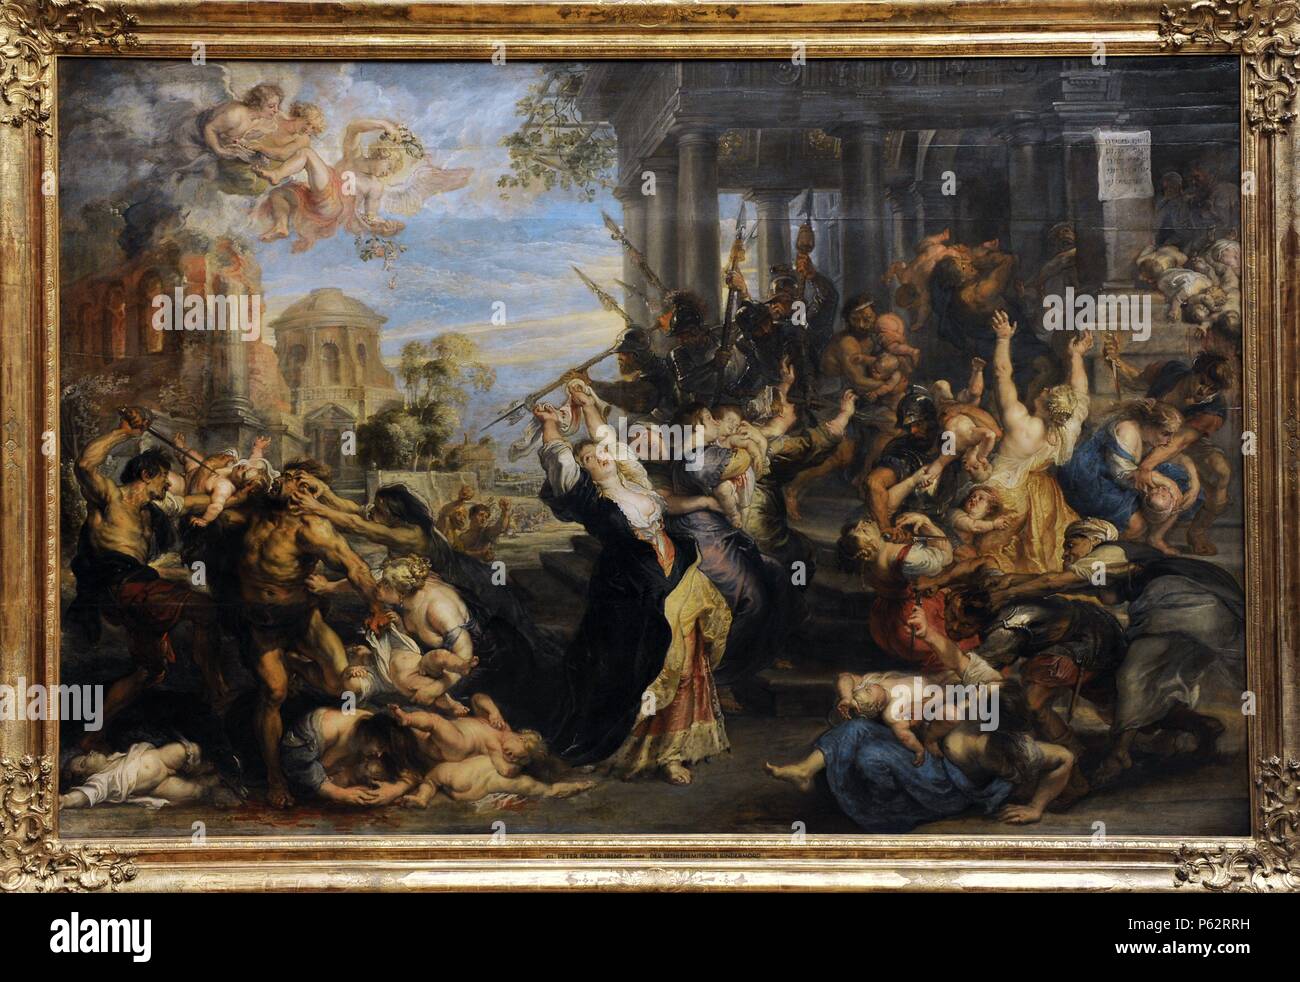 Peter Paul Rubens (1577-1640). German-born Flemish Baroque painter. Massacre of the Innocents, 1635-40. Version Pinakothek. Munich. Germany. Stock Photo